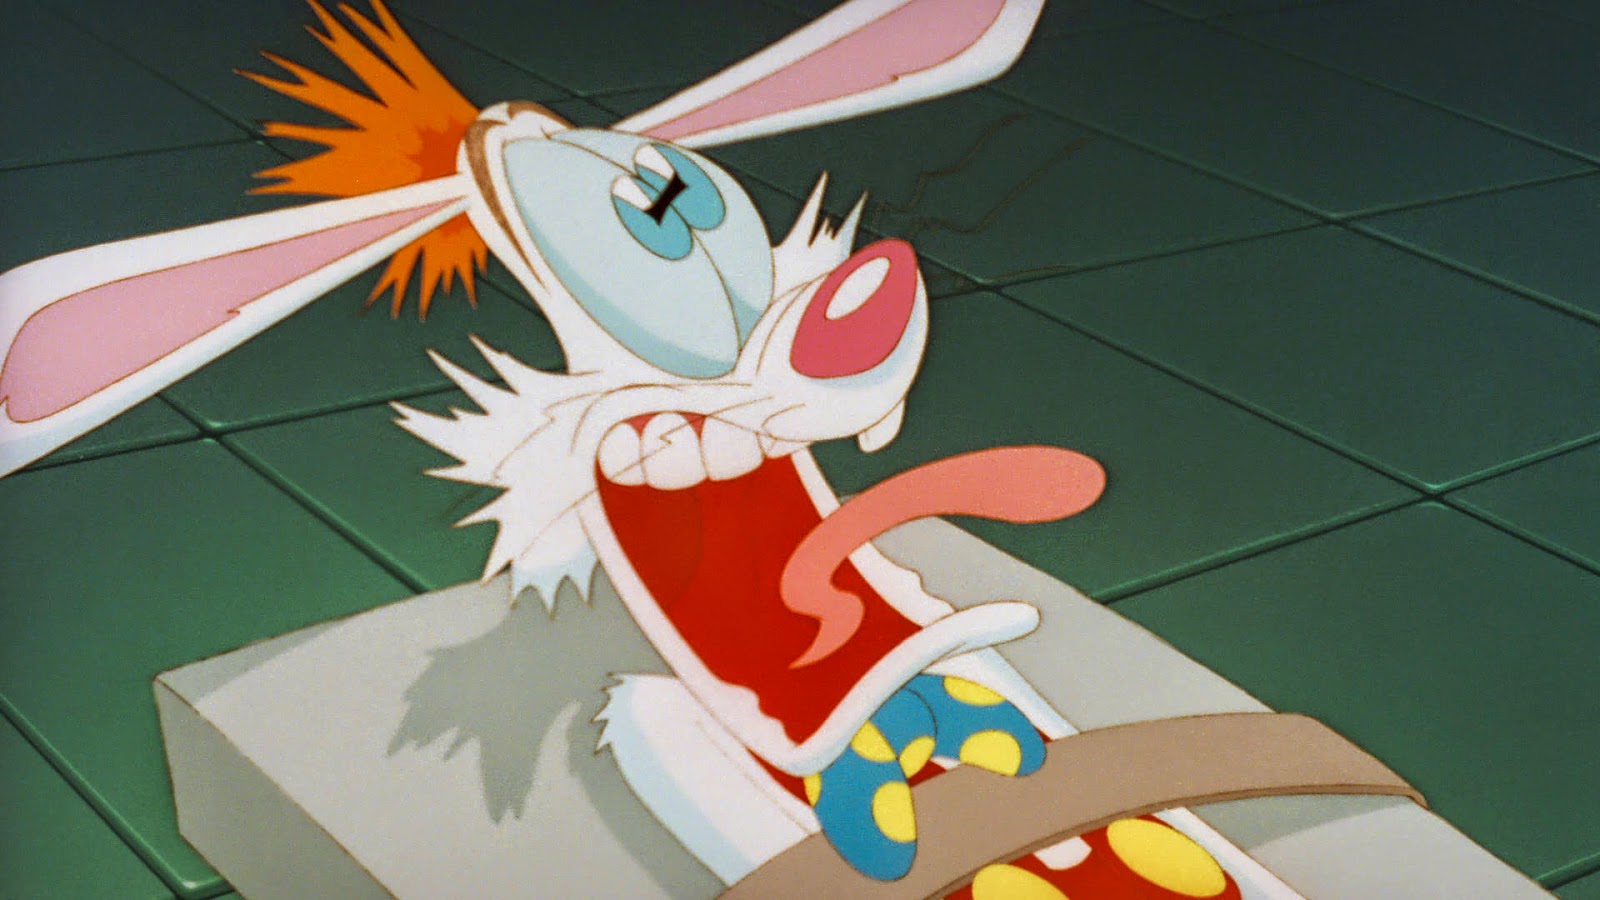 Roger Rabbit short #1 - "Tummy Trouble". Rosso Rabbit in Trouble. Кролик моя мелодия.